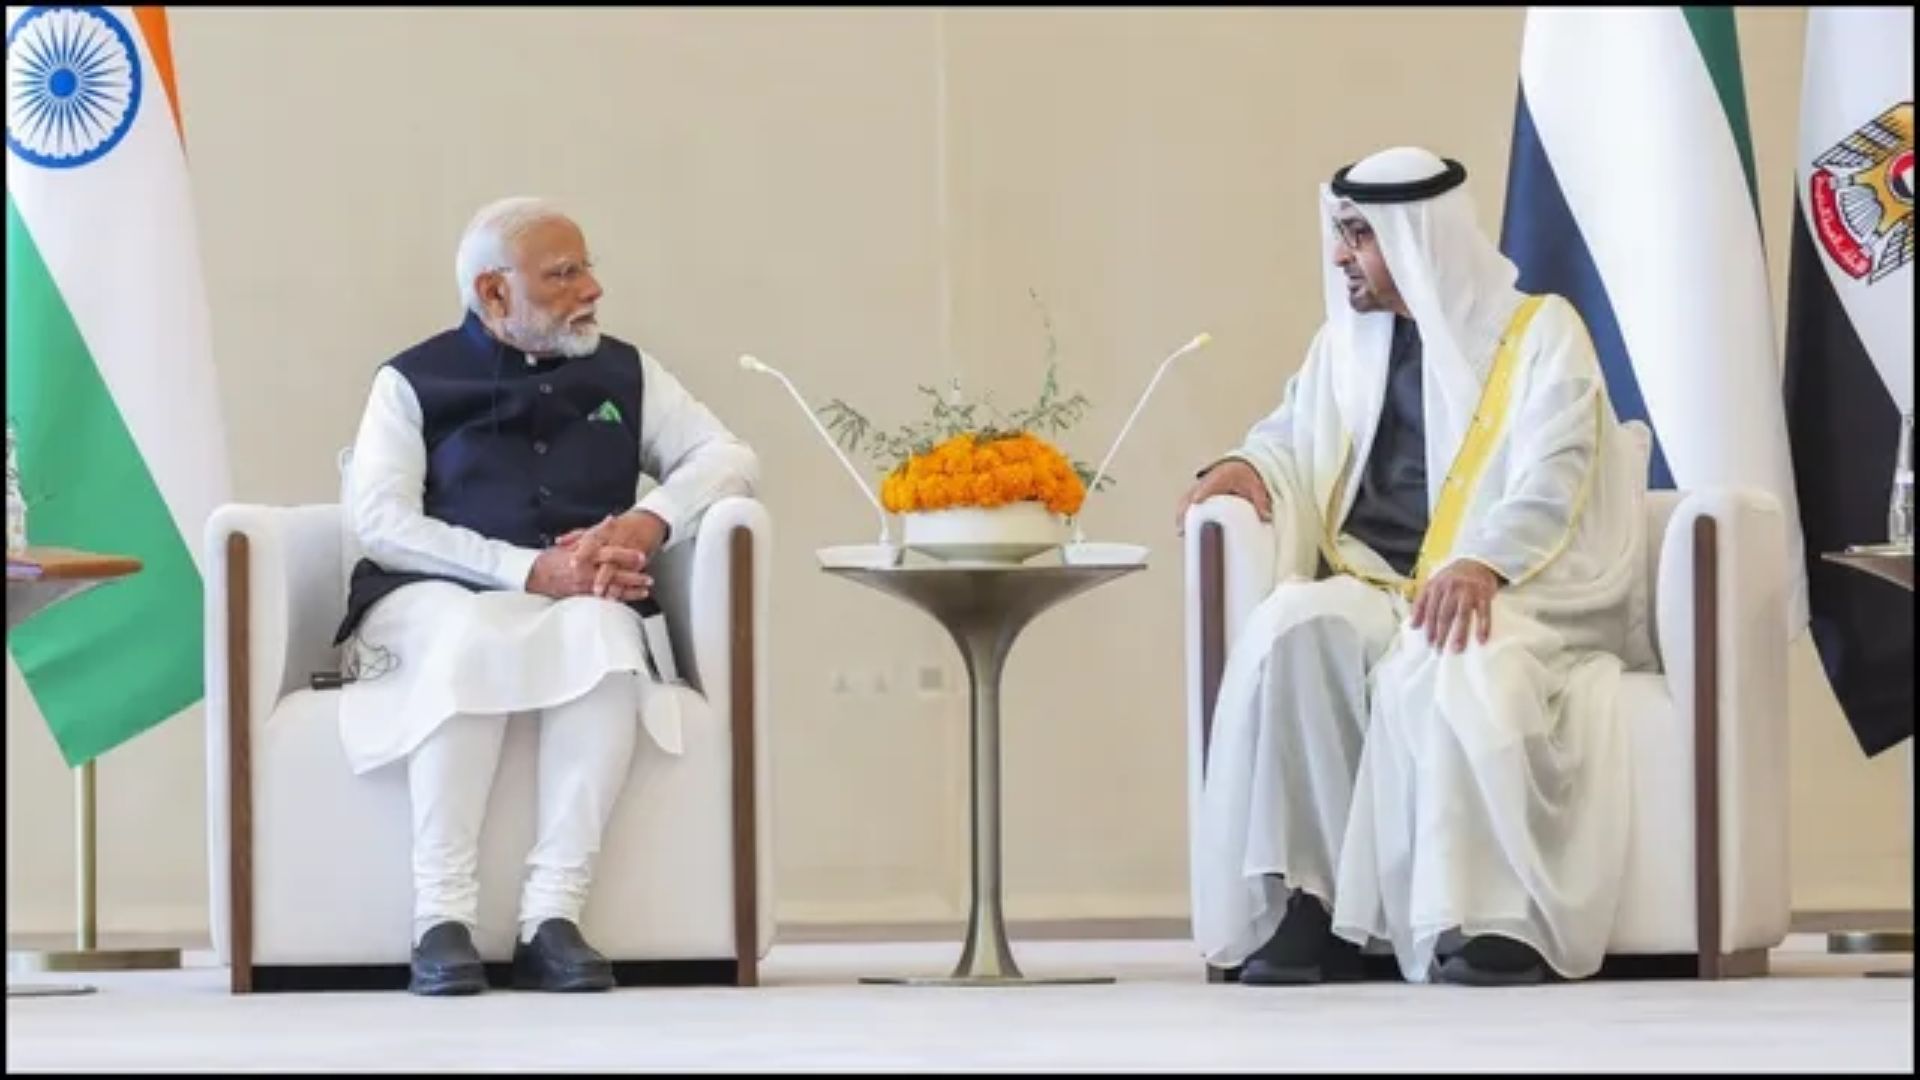 India-UAE Partnership Strengthened: PM Modi’s Visit Highlights Comprehensive Ties